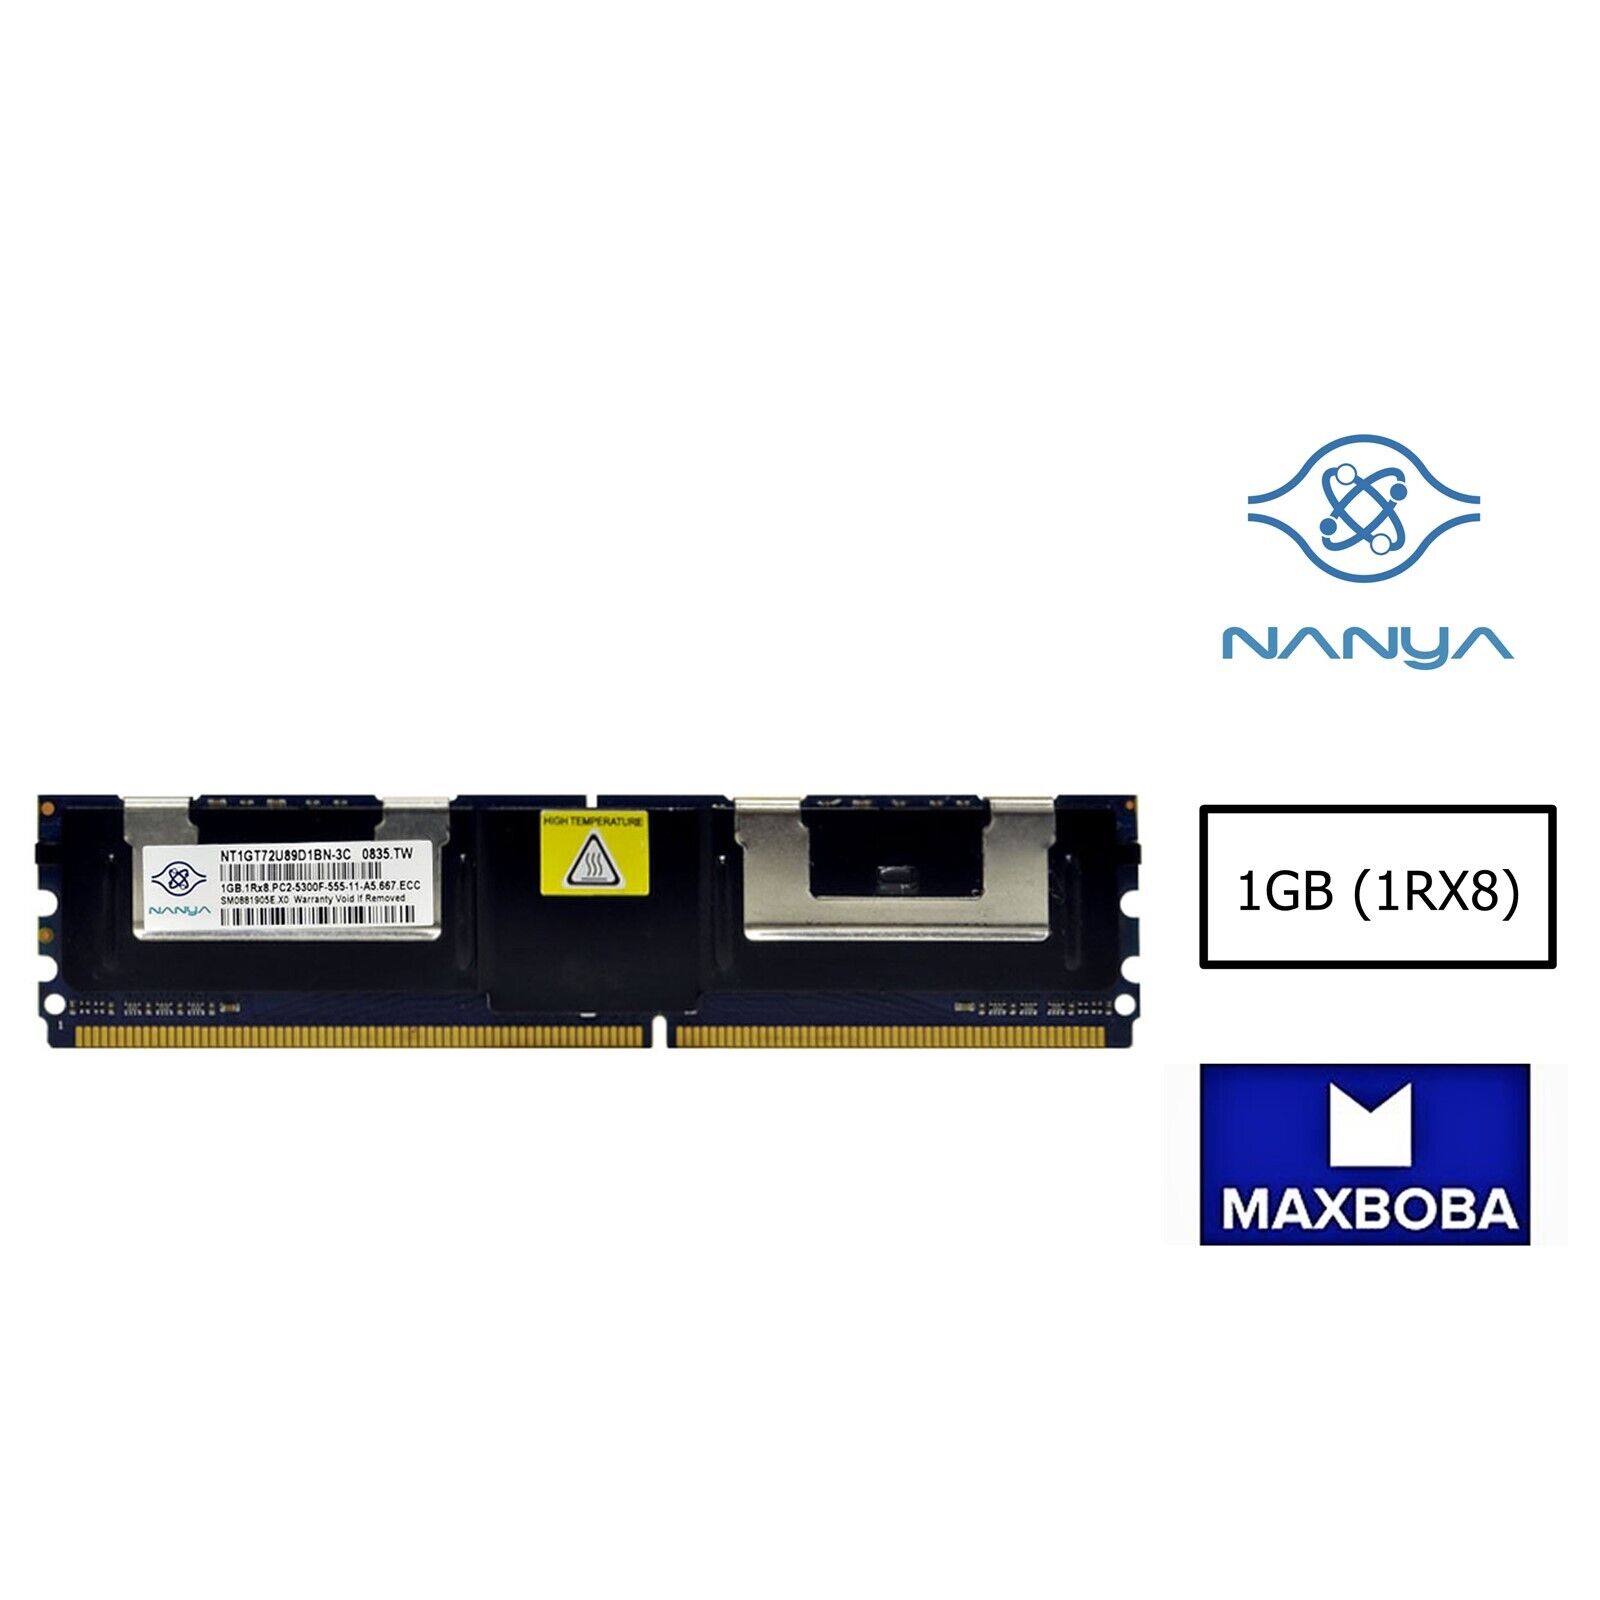 Memory Nanya 5300F 1GB Desktop PC RAM DDR2 1RX8 NT1GT72U89D1BN-3C